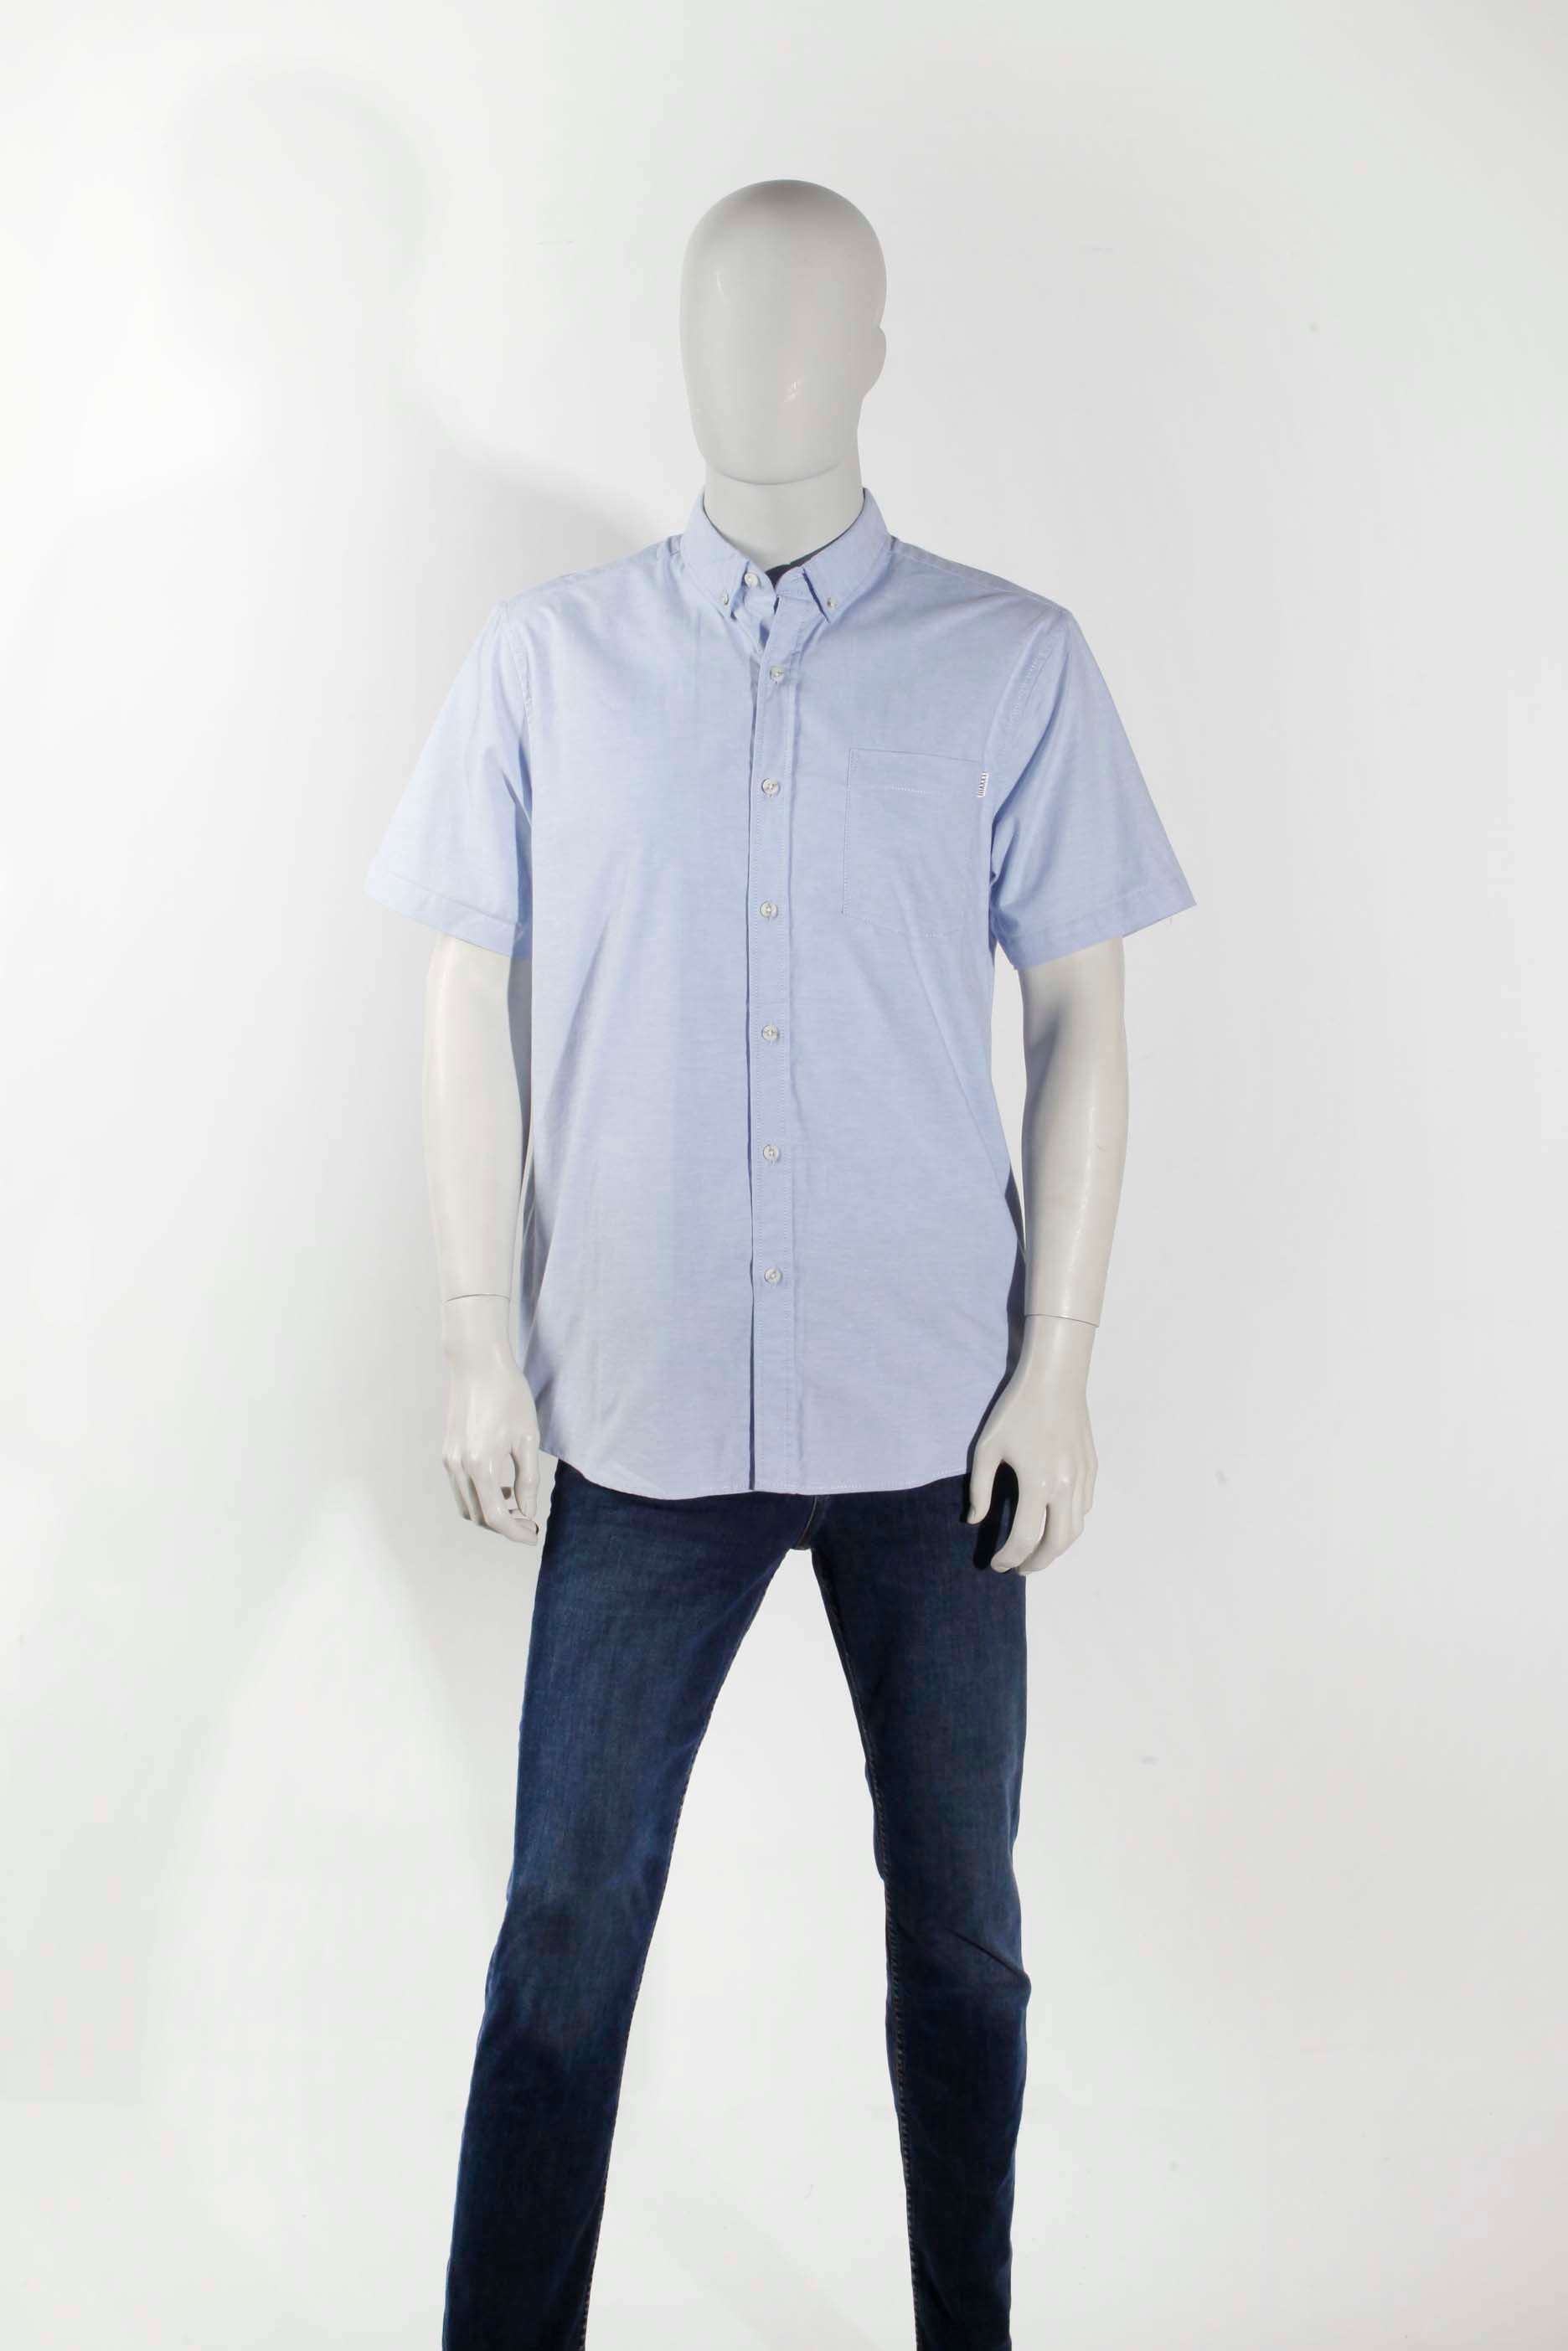 Blue Short-Sleeved Shirt (Large)